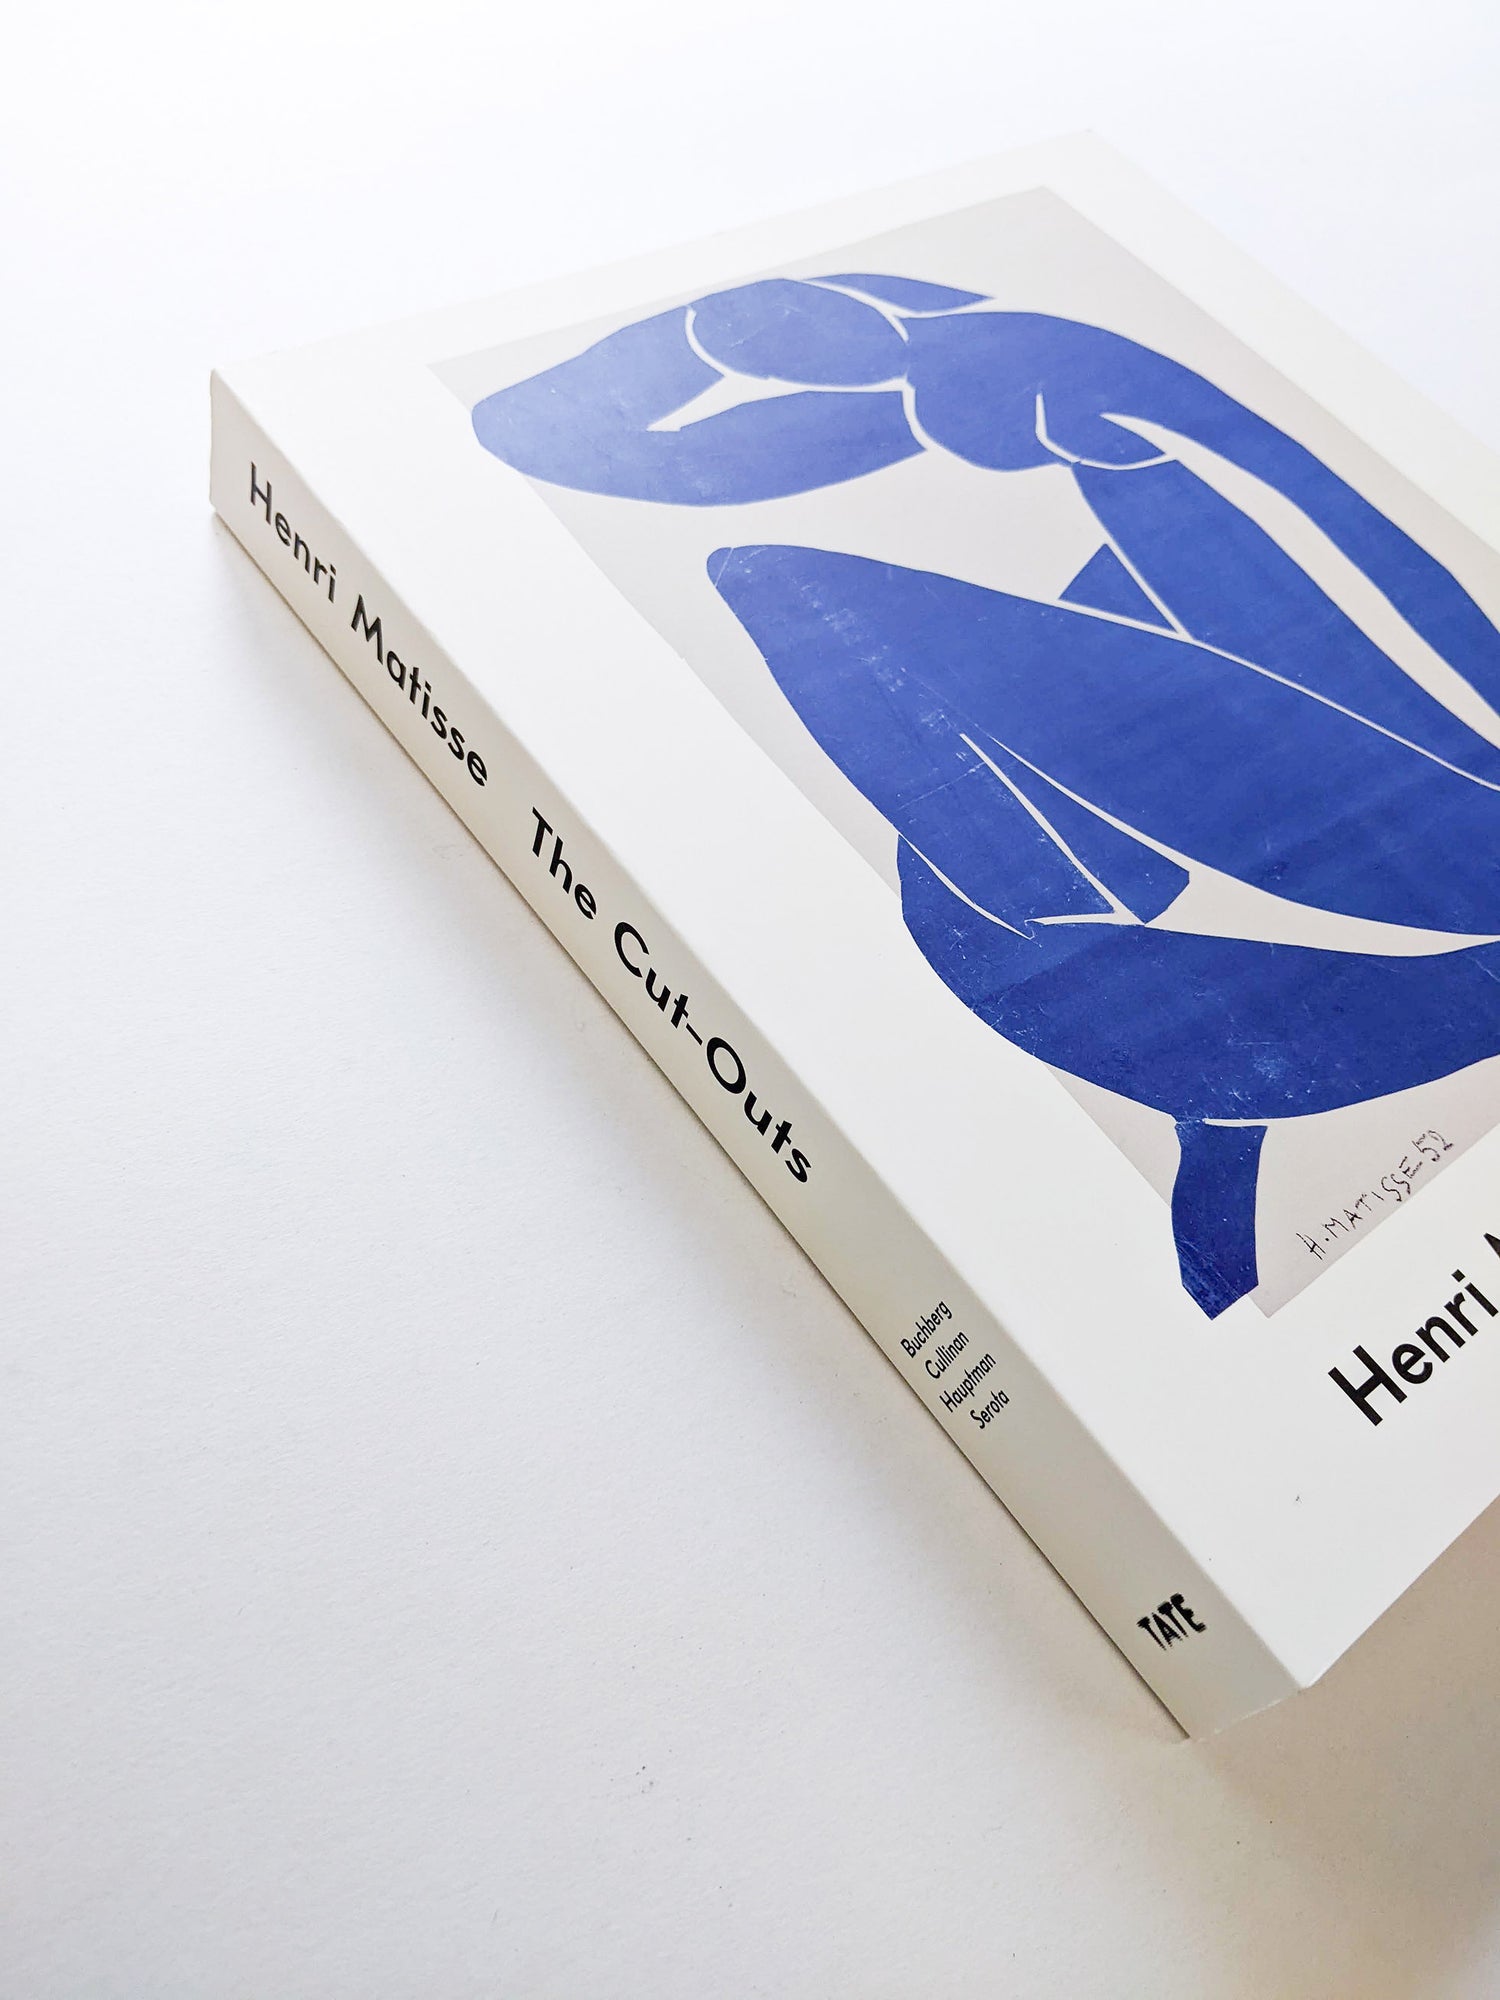 THE CUT-OUTS / Henri Matisse - 本 屋 青 旗 Ao-Hata Bookstore